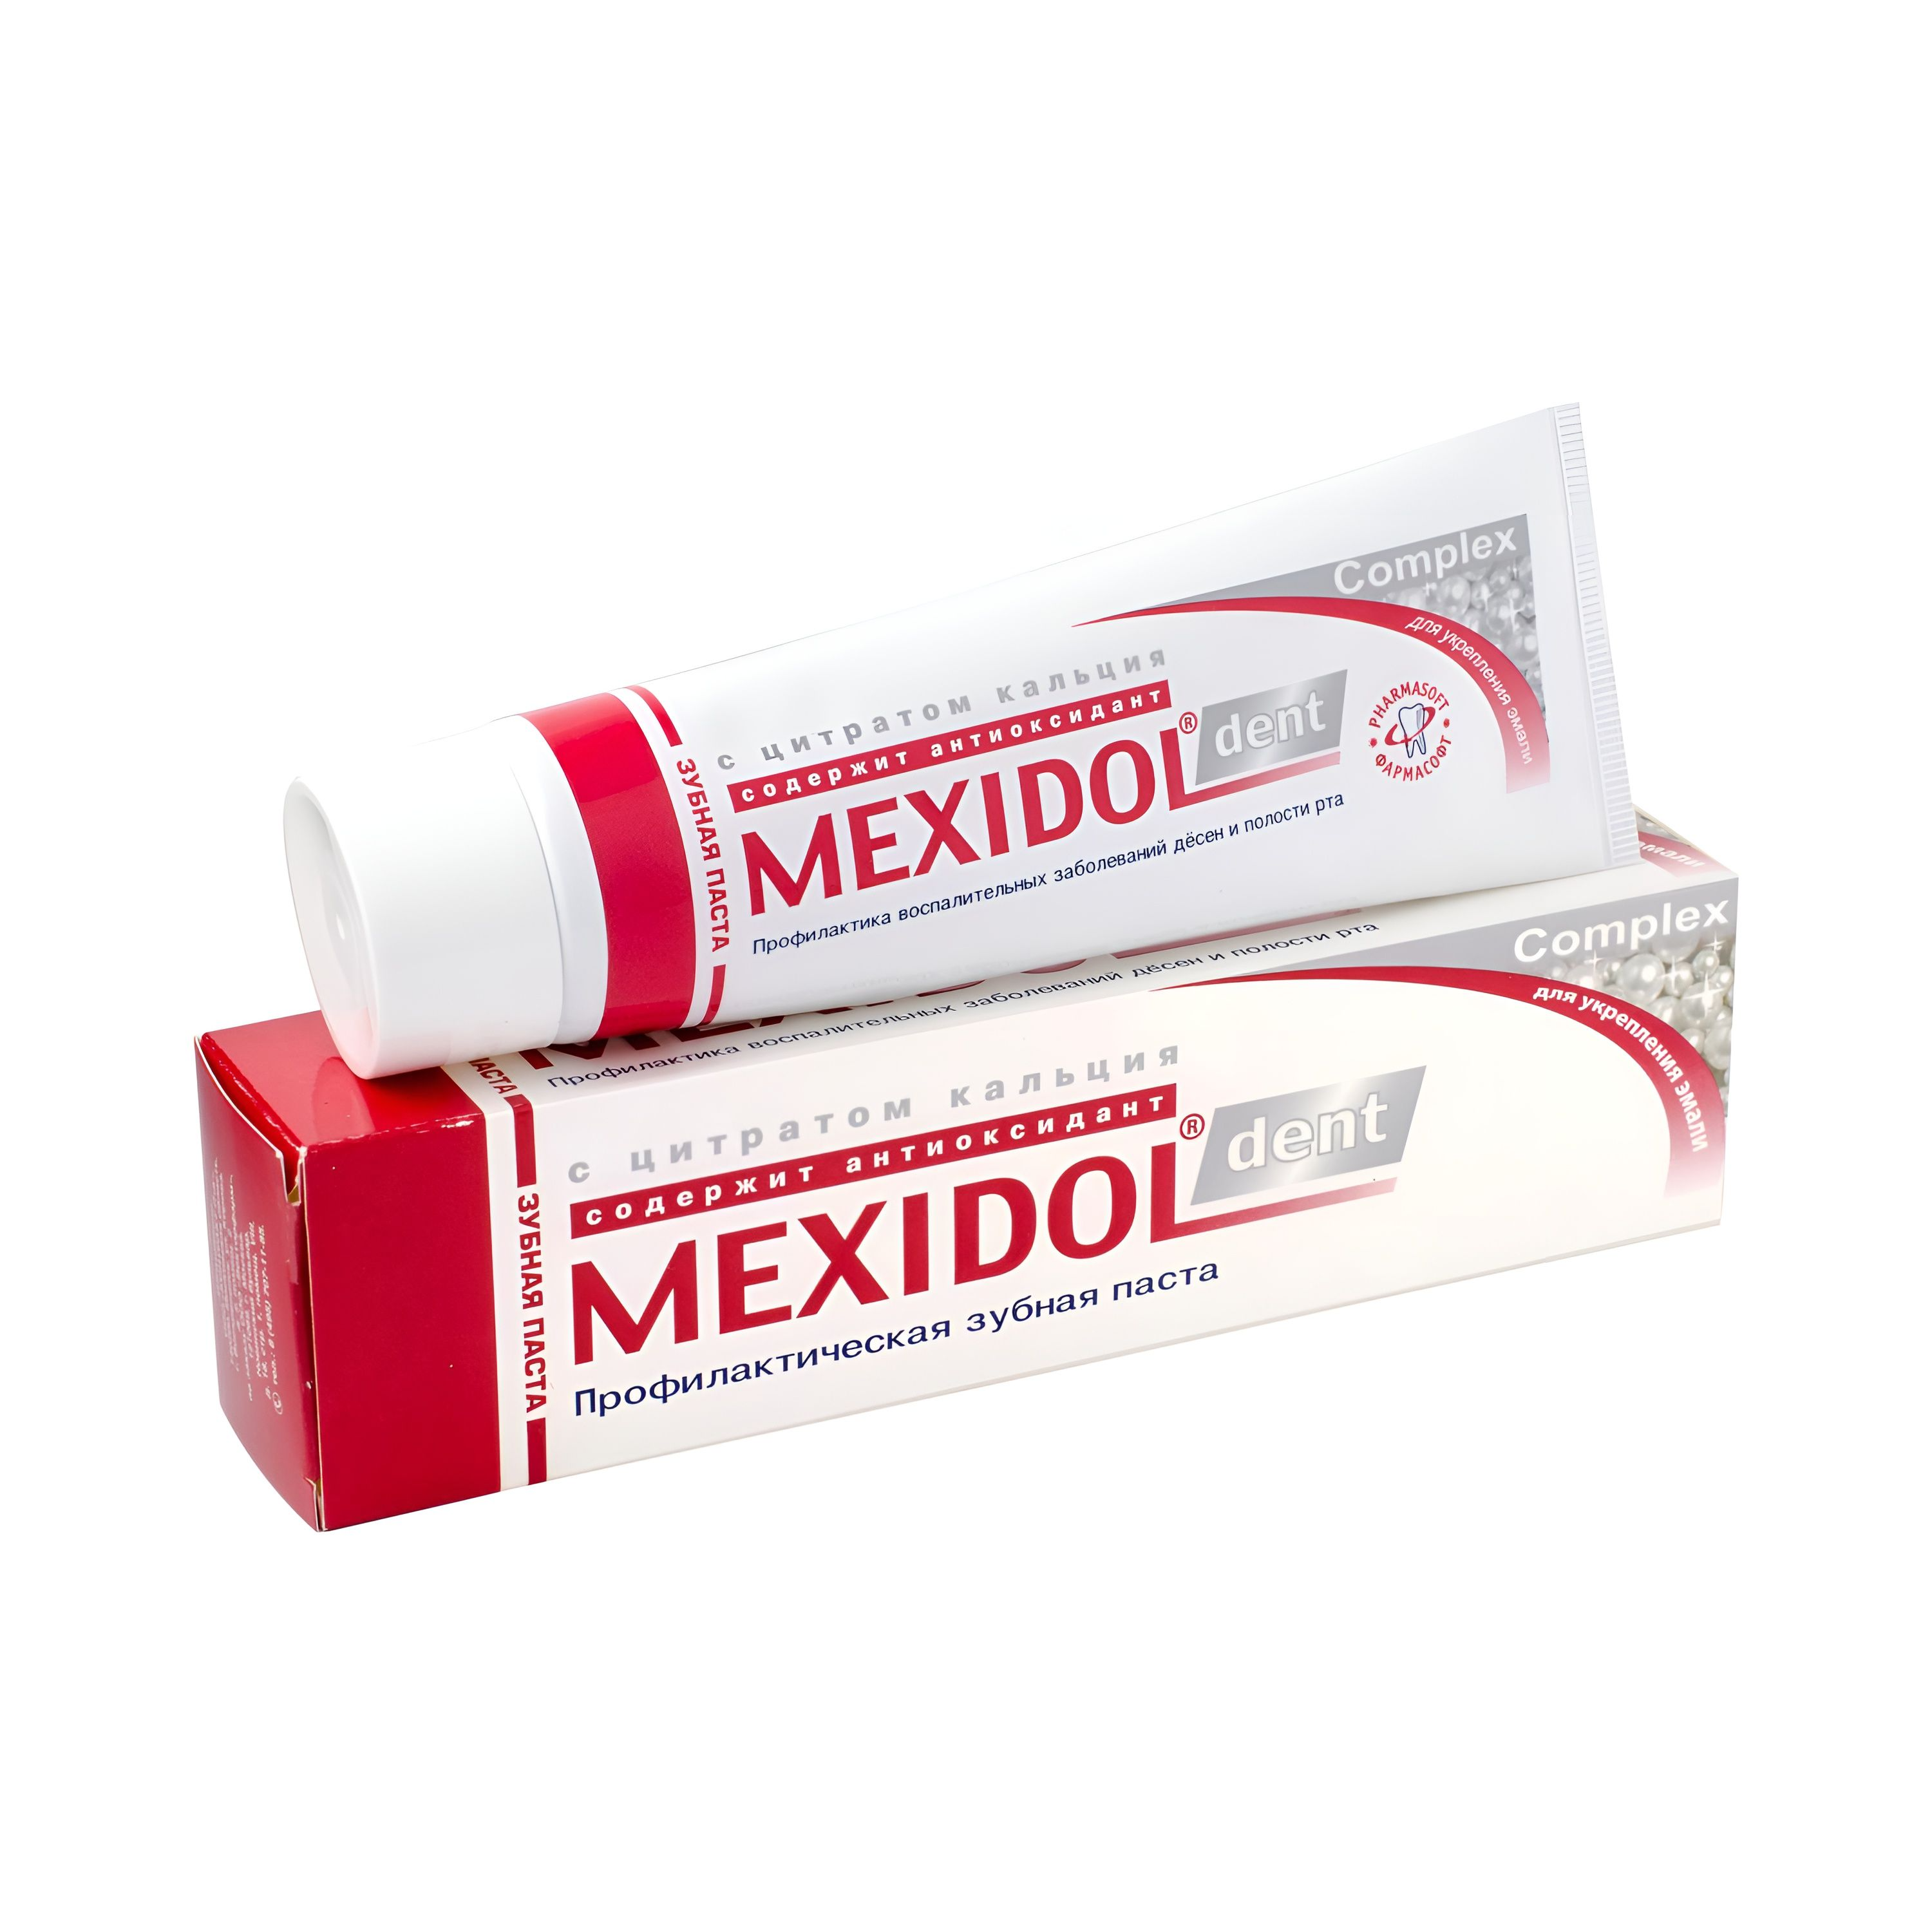 Мексидол Дент Комплекс, зубная паста, 65 г мексидол дент фито зубная паста 65 г